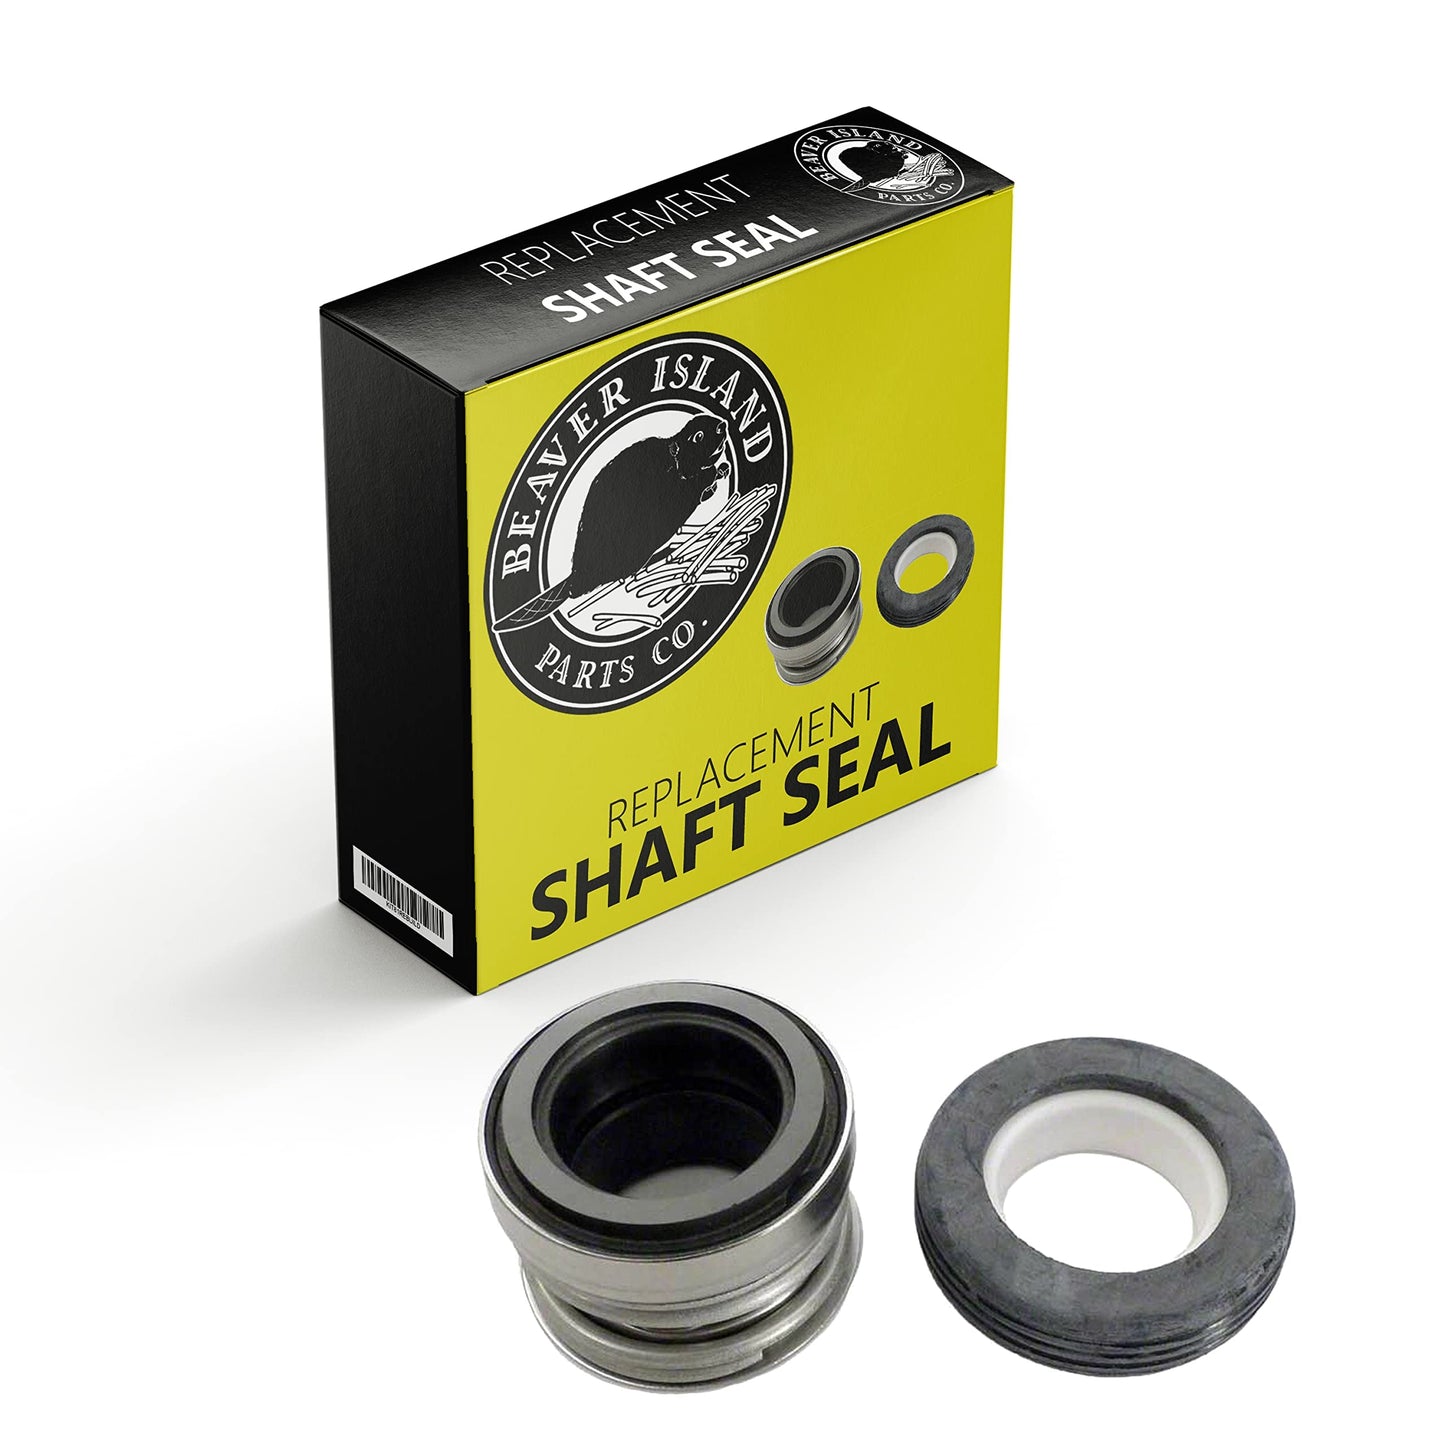 Shaft Seal Replacement for Pentair Sta-Rite Industries Swim-Quip VI Series 37407-0009 Pump Motor Mechanical Seal